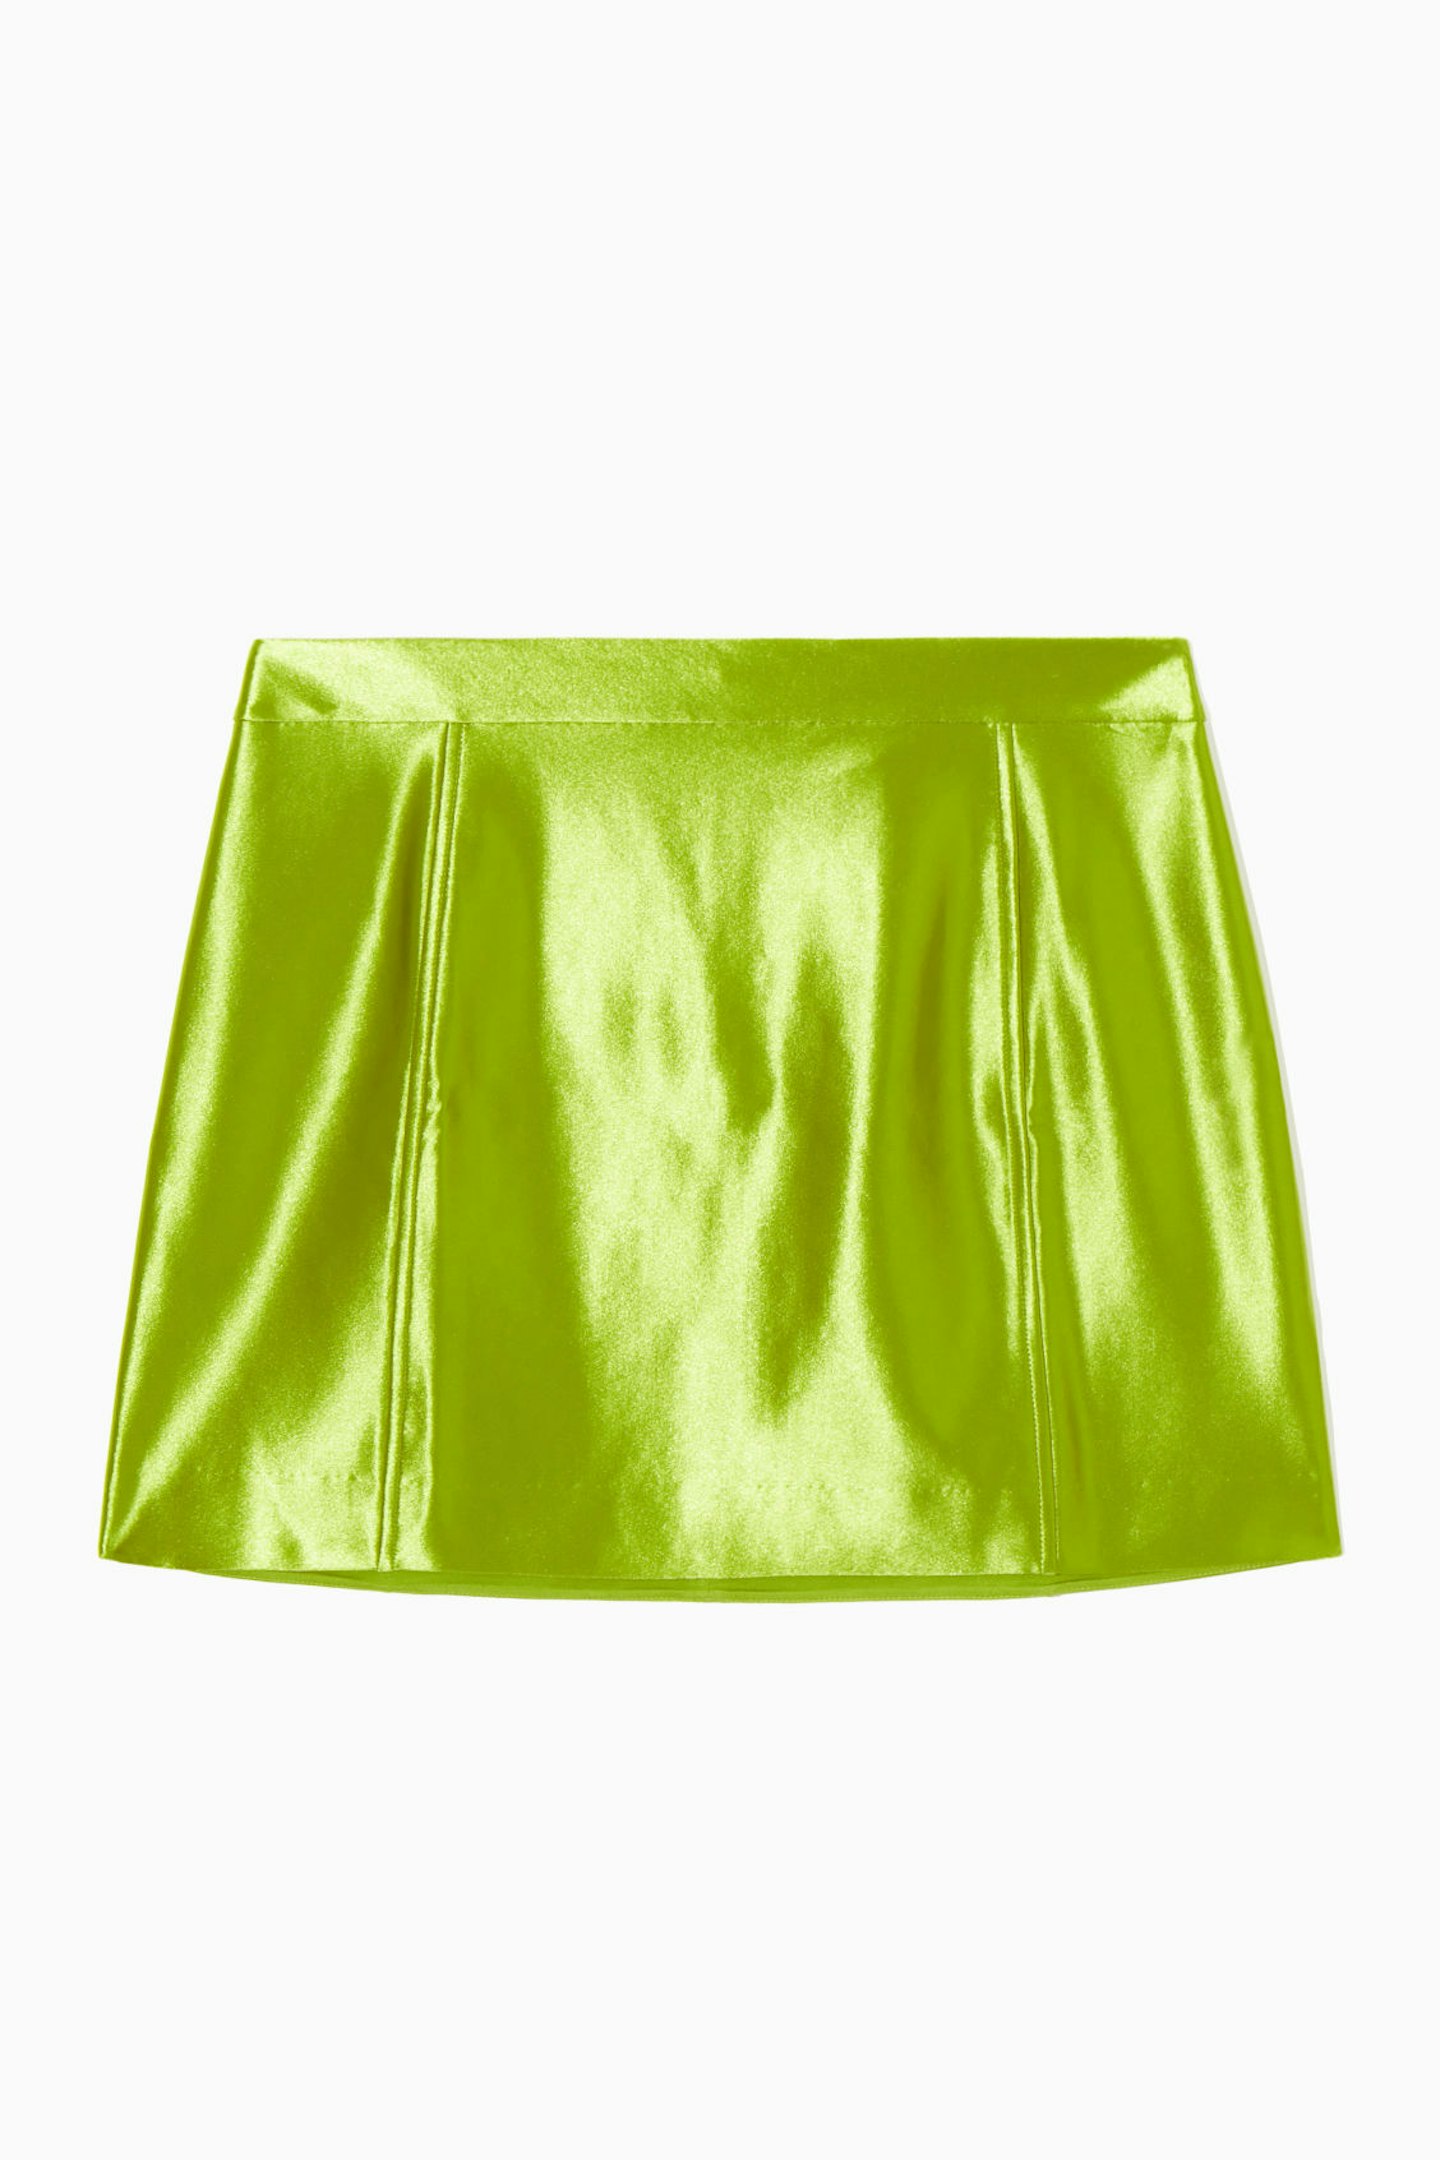 COS, High-Shine Satin Mini Skirt